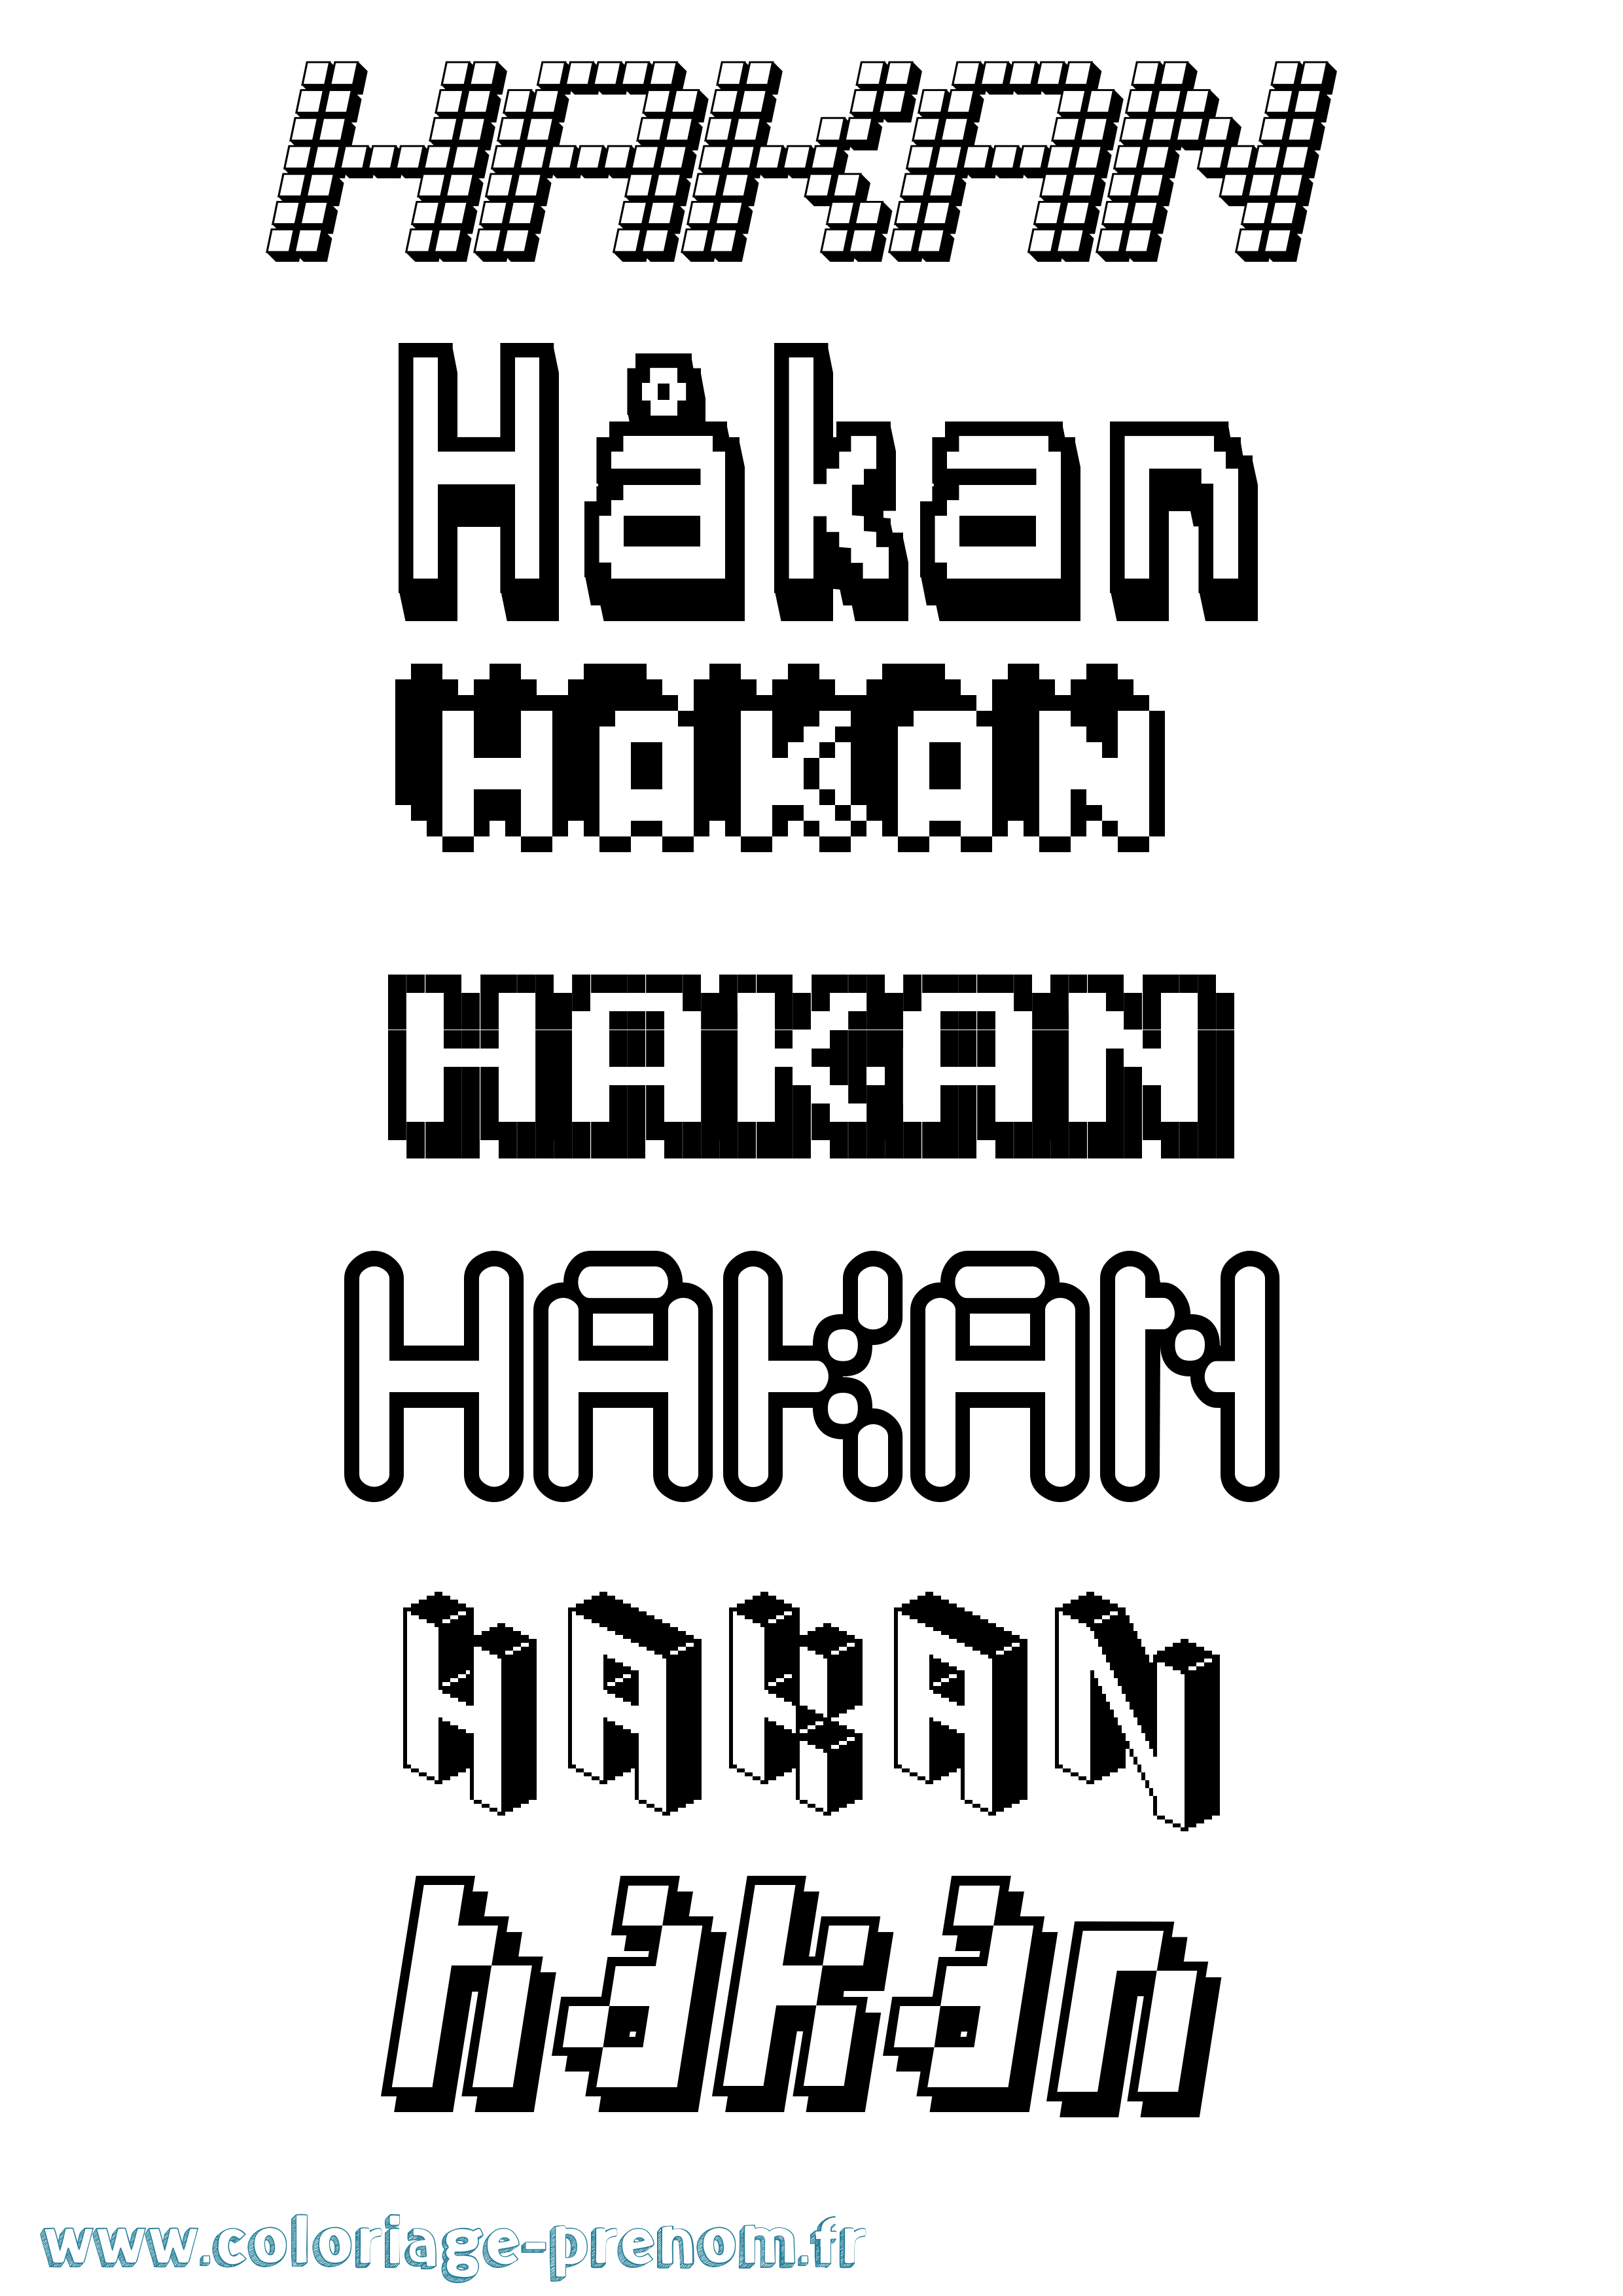 Coloriage prénom Håkan Pixel